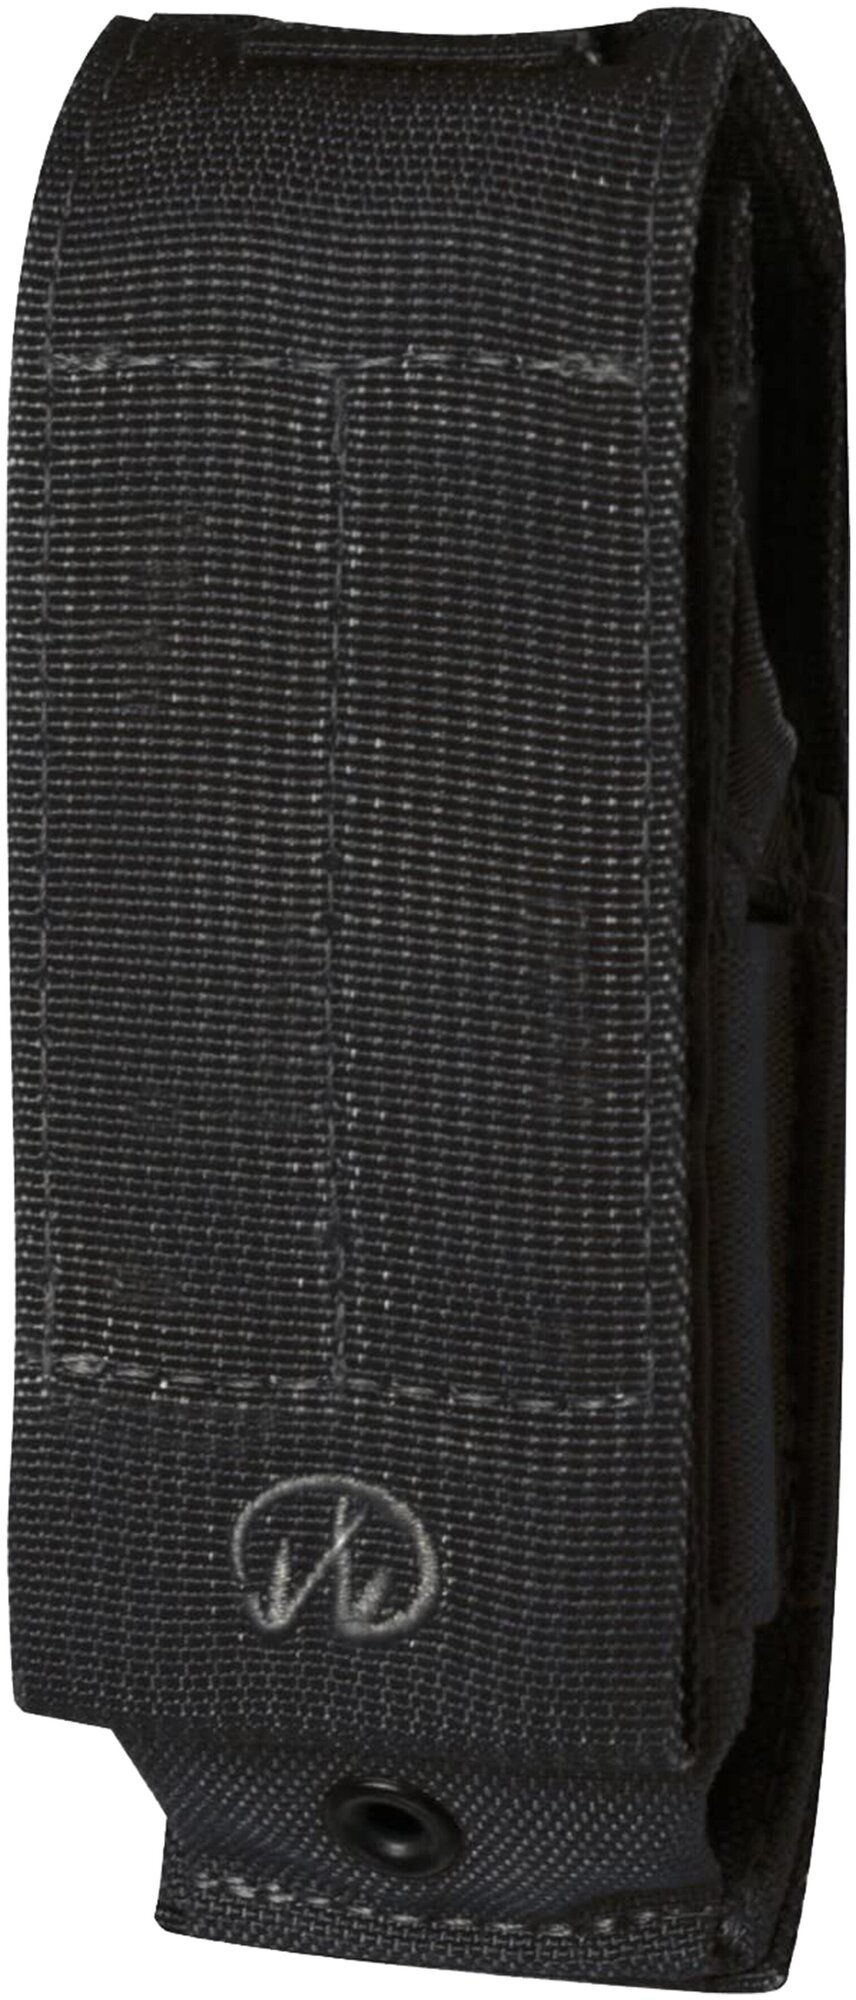 Чехол Leatherman Sheath L (931005) нейлон черный - фото №7